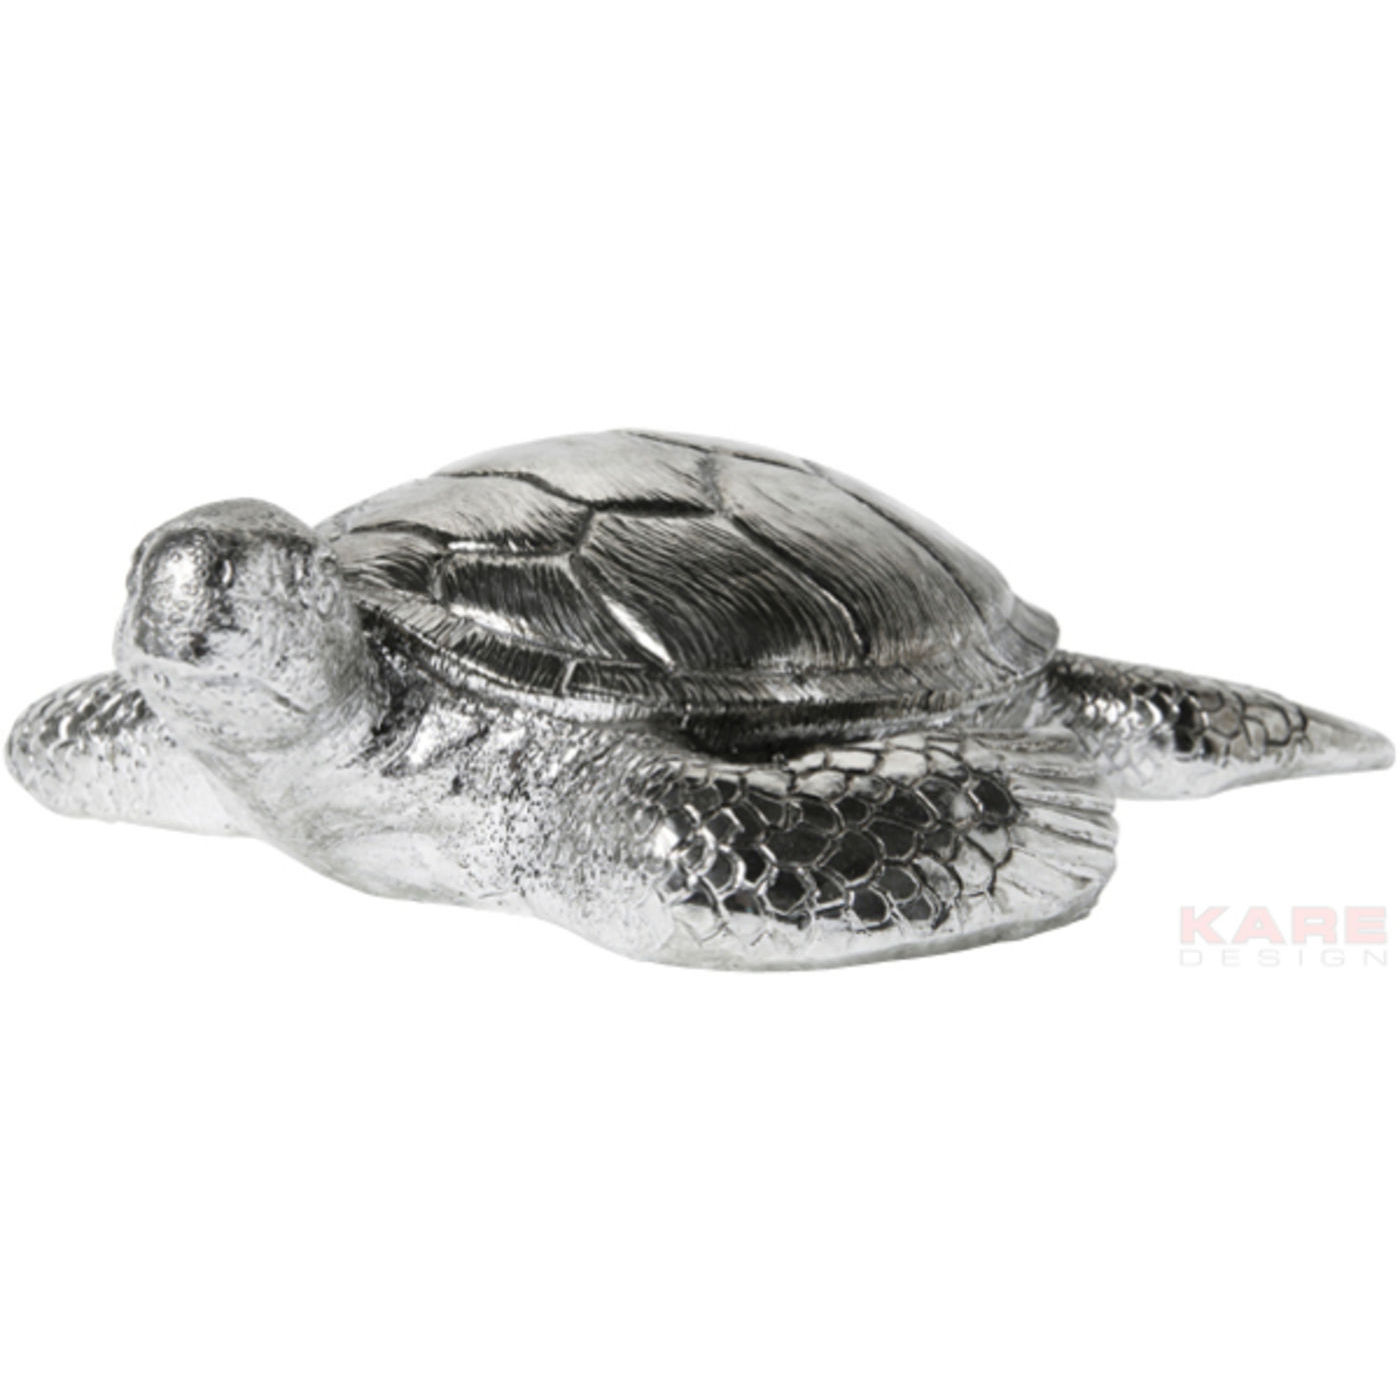 Deko Figur Turtle Schildkröte Antik Silber